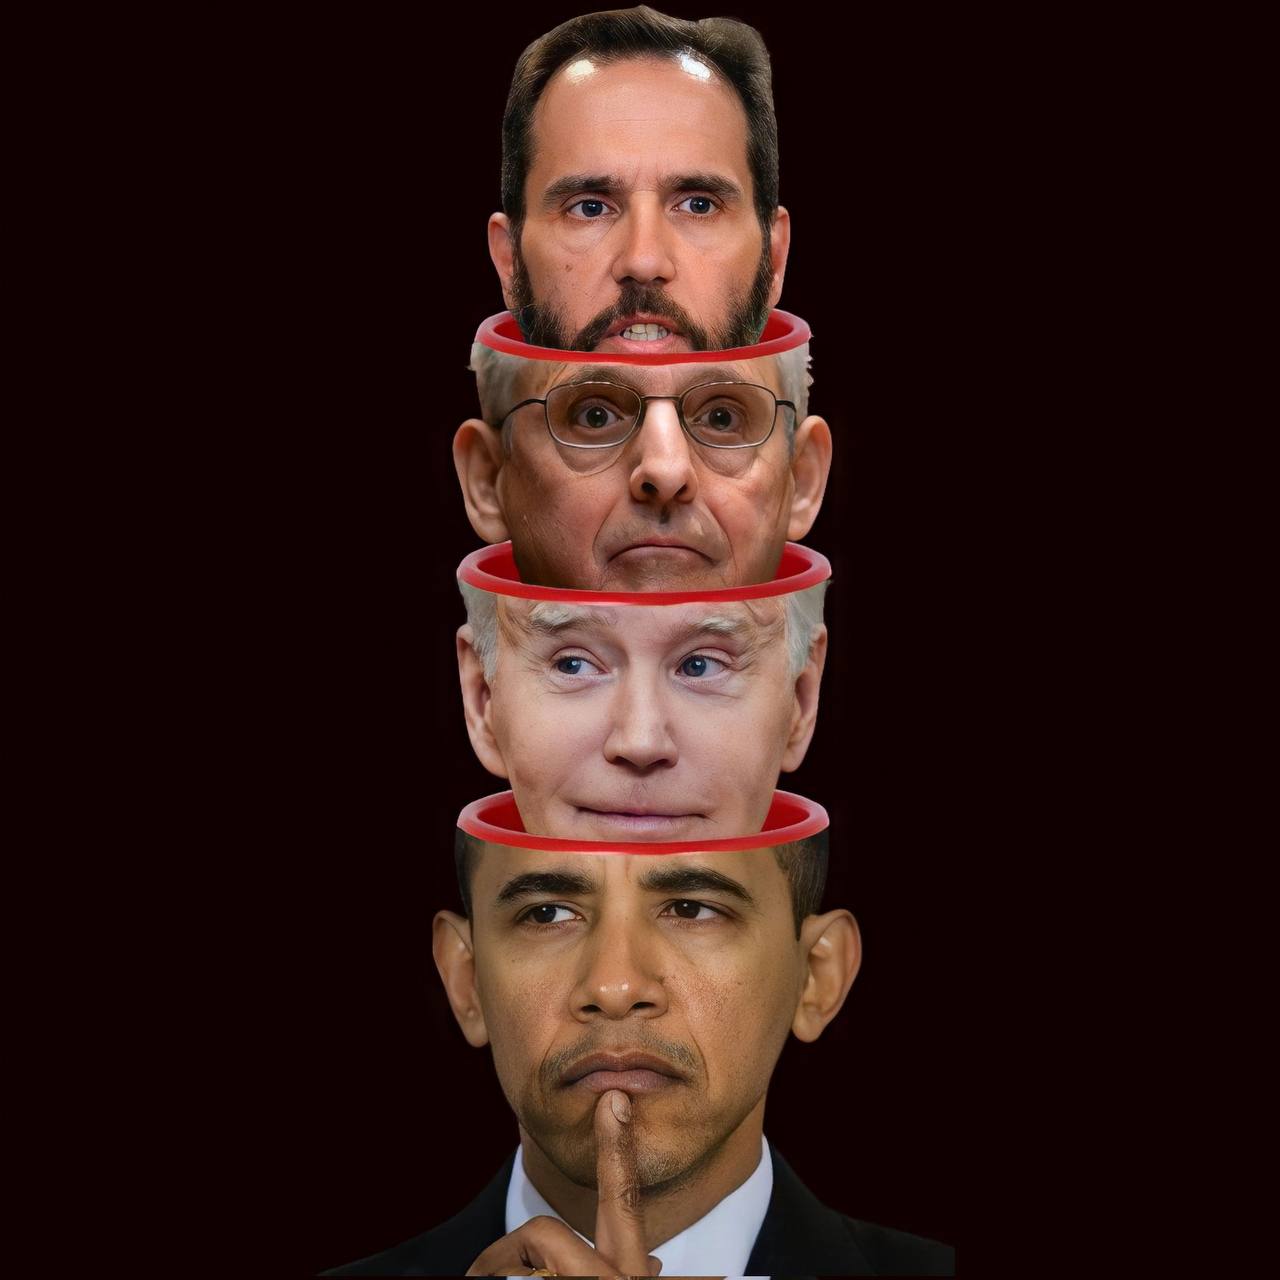 Matryoshka dolls - Obama, Biden, Garland, Smith.jpg